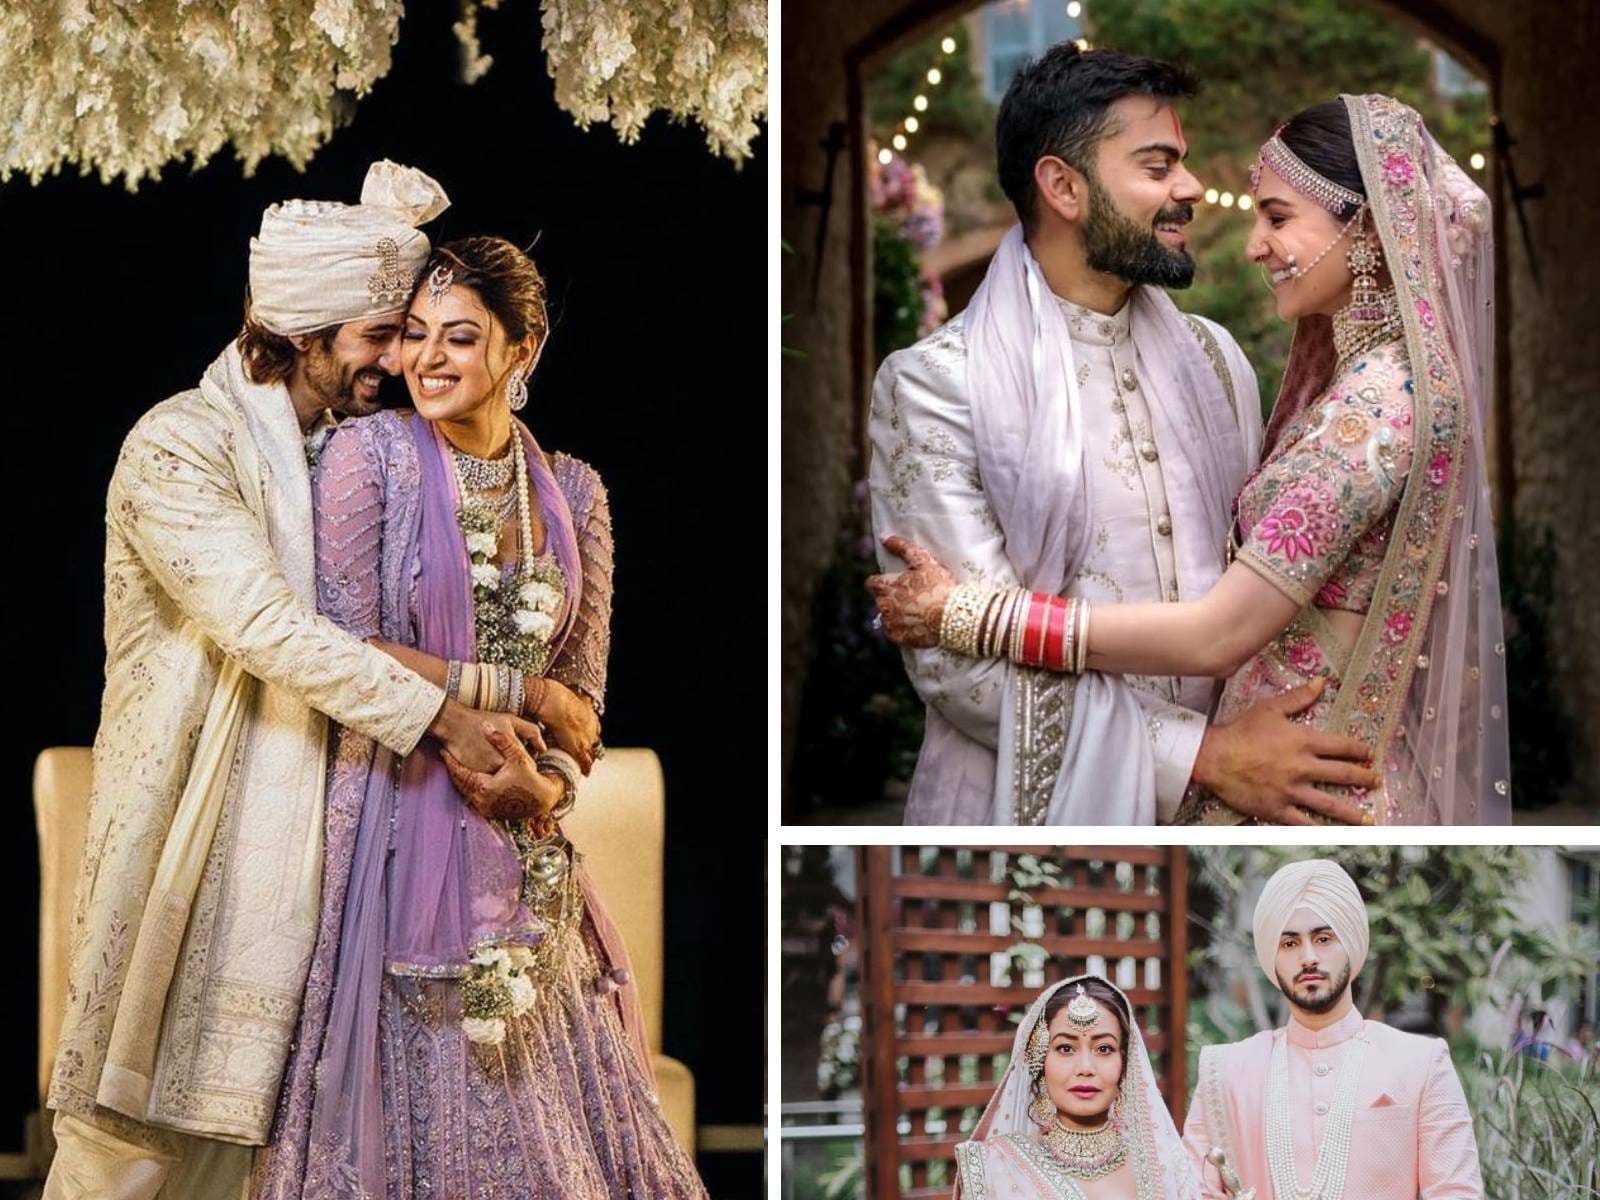 Best photos from Anushka Sharma and Virat Kohli's Delhi wedding reception |  Entertainment Gallery News - The Indian Express